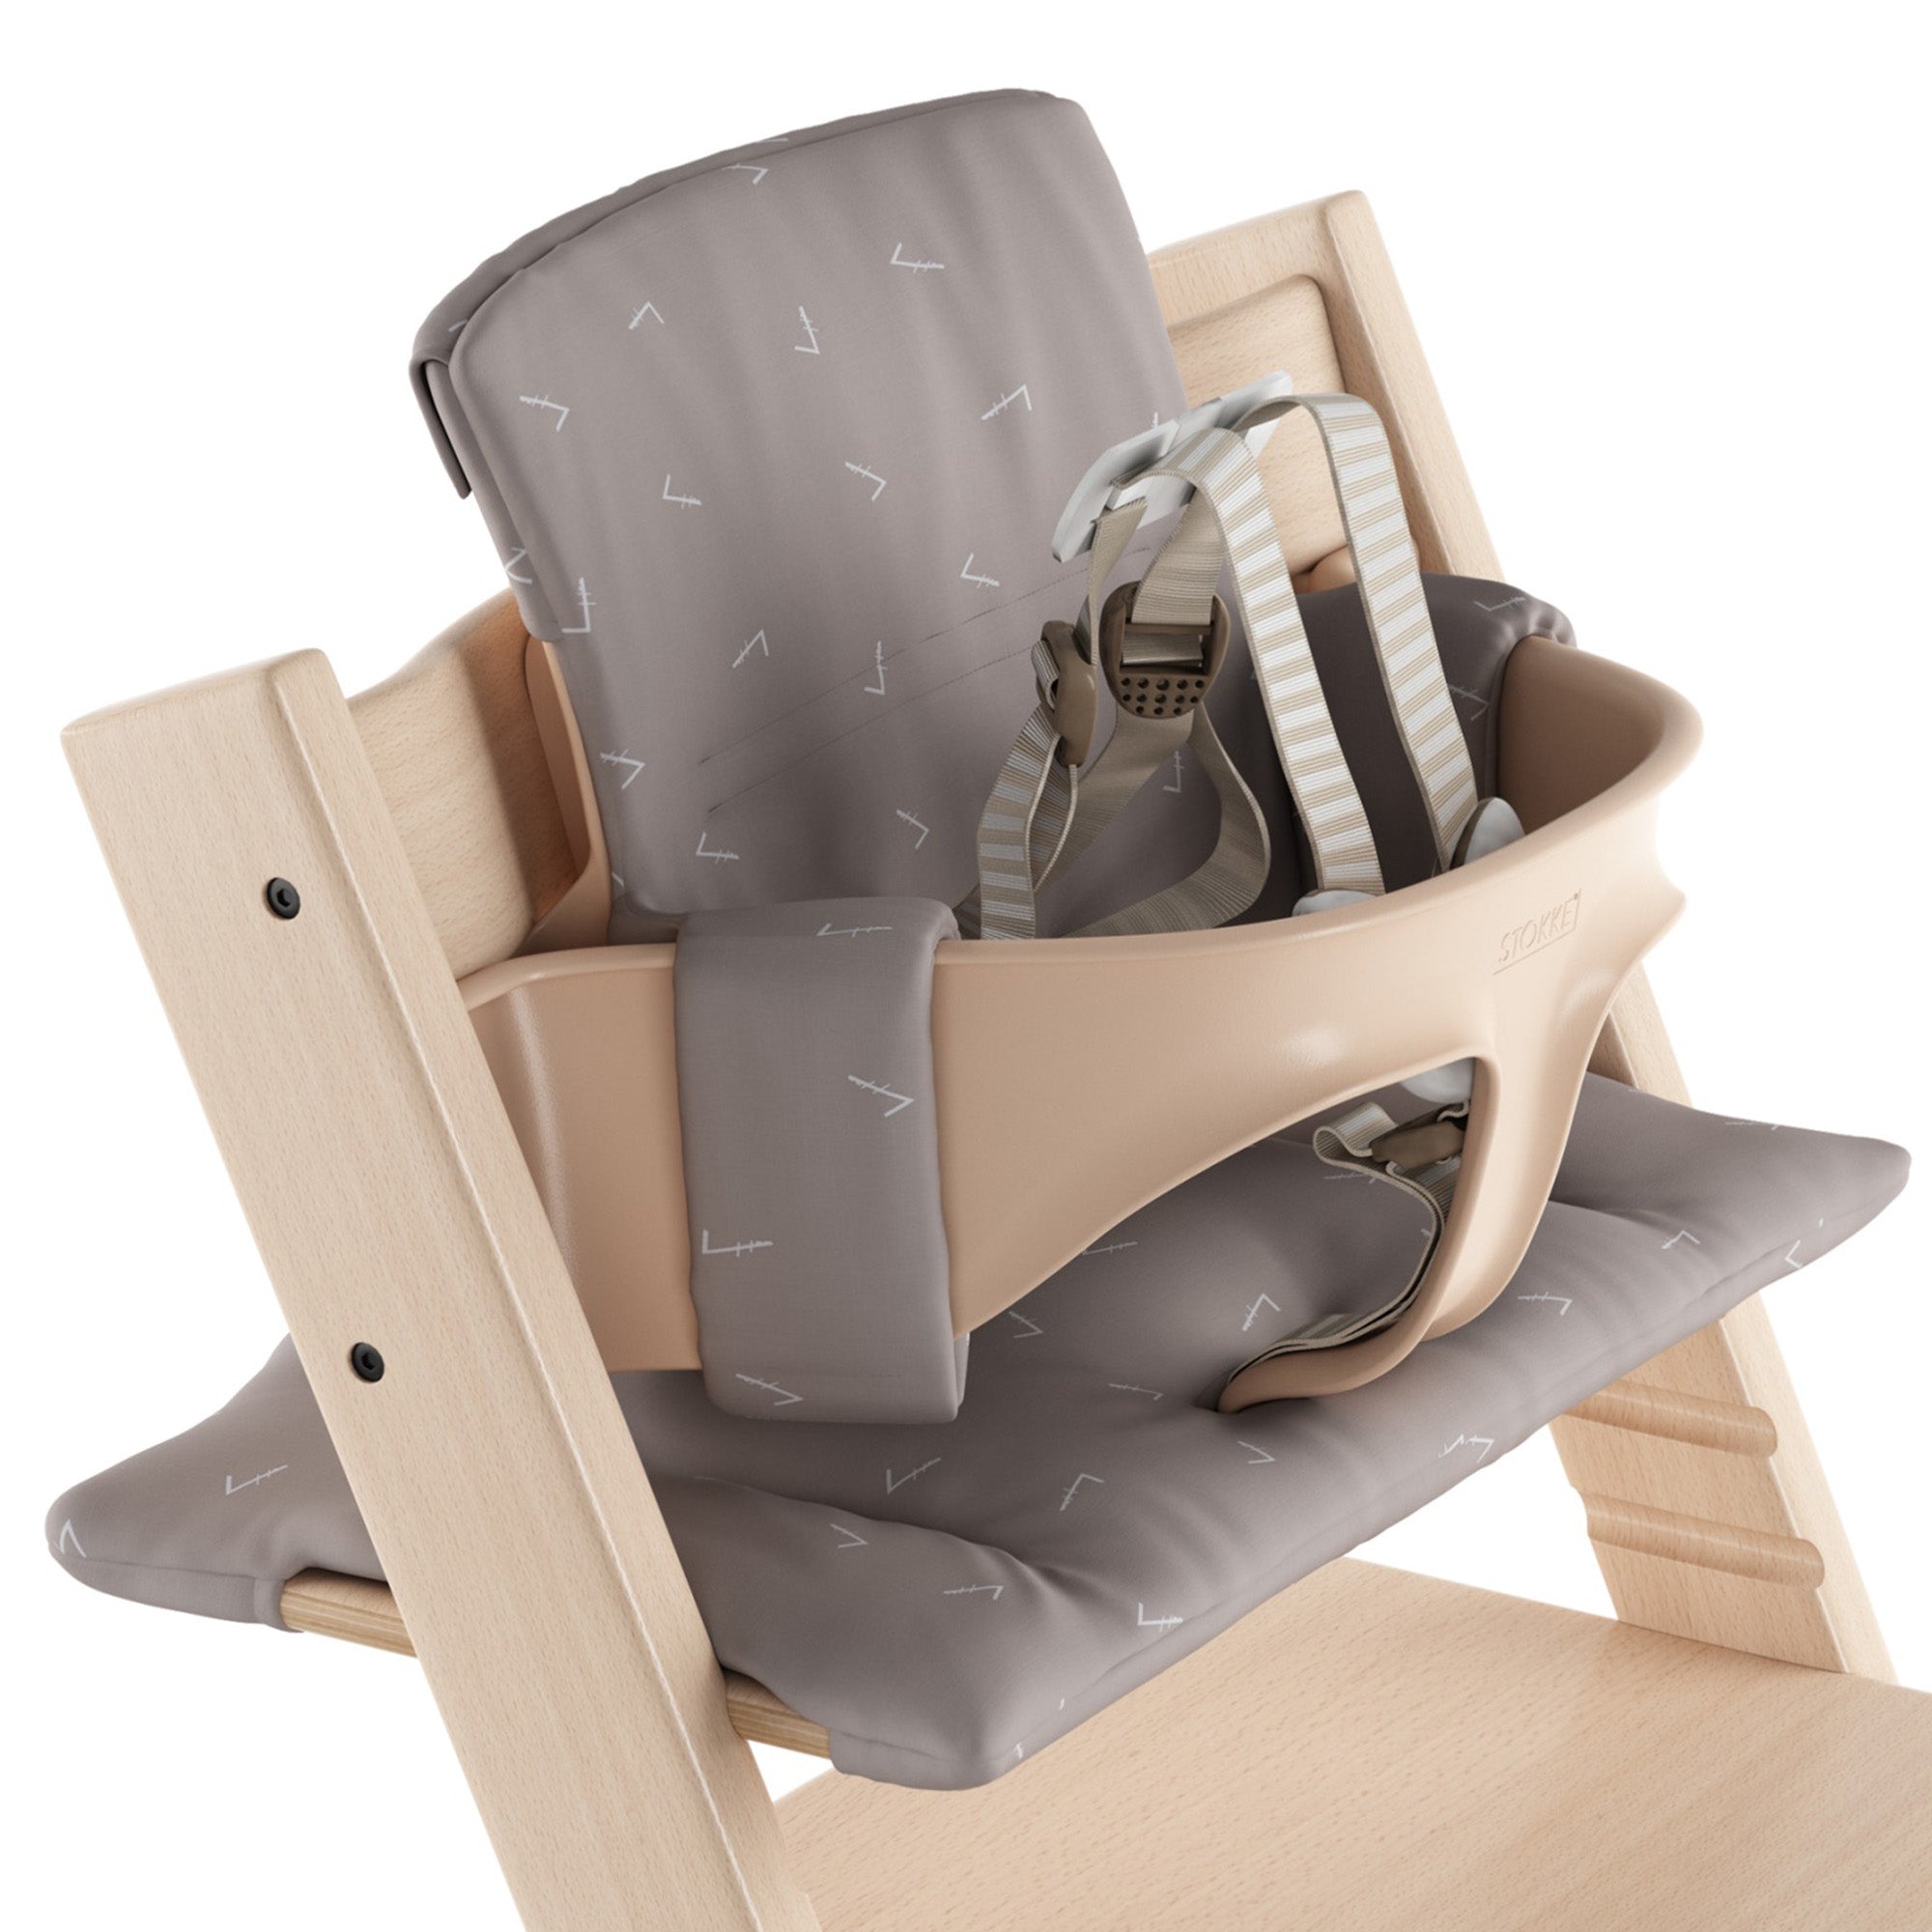 Stokke Tripp Trapp Classic High Chair Cushion - ANB Baby -$20 - $50